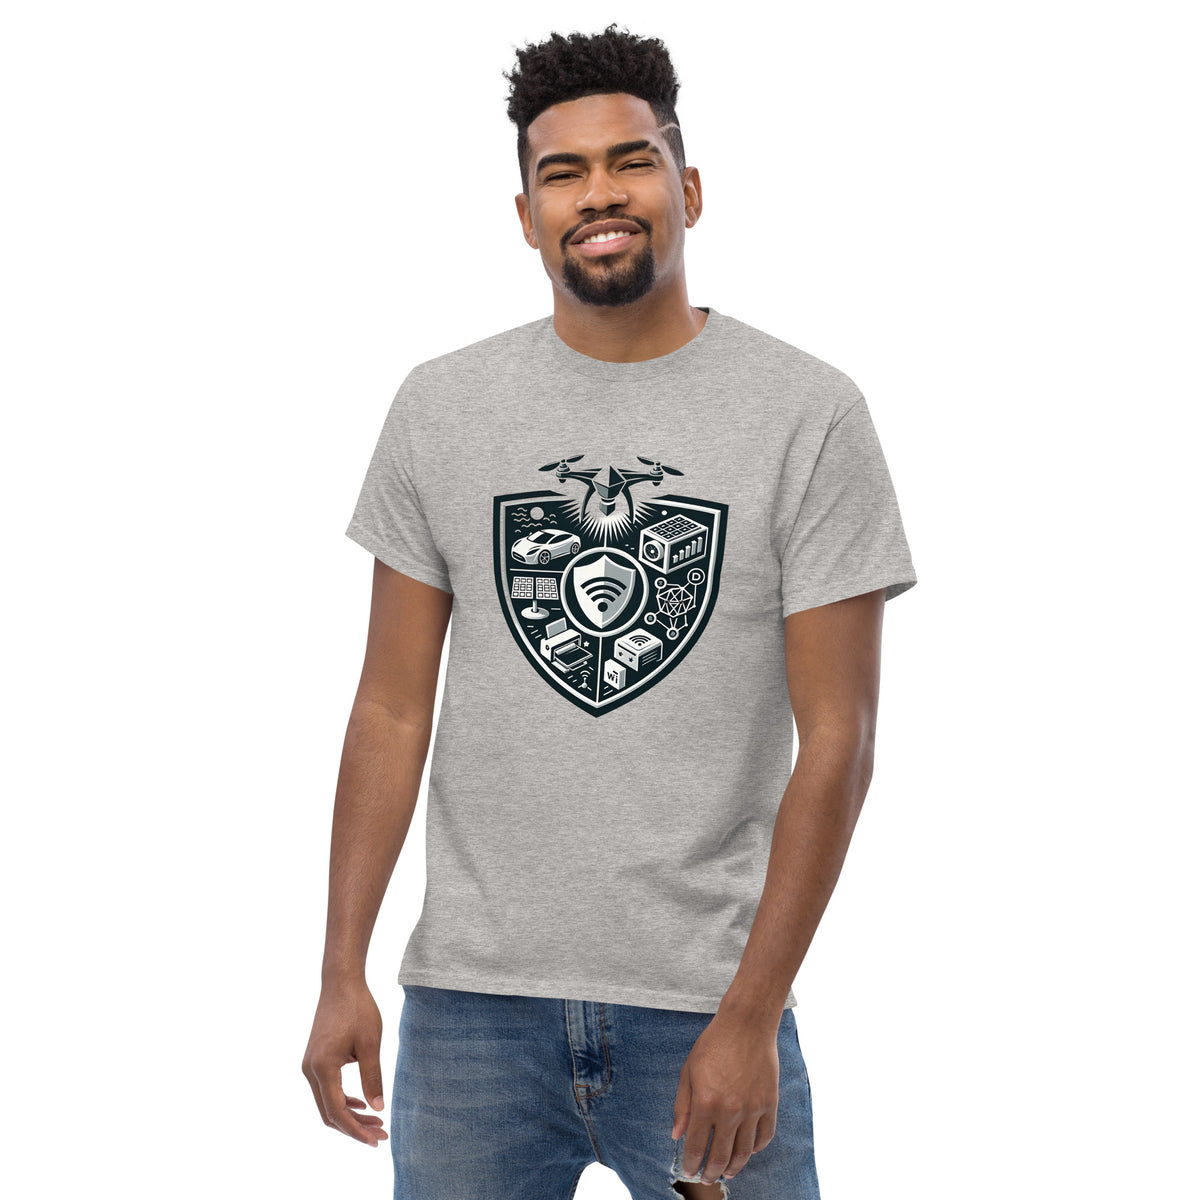 Modern Family Crest - Connectivity | Men's Classic T-shirt